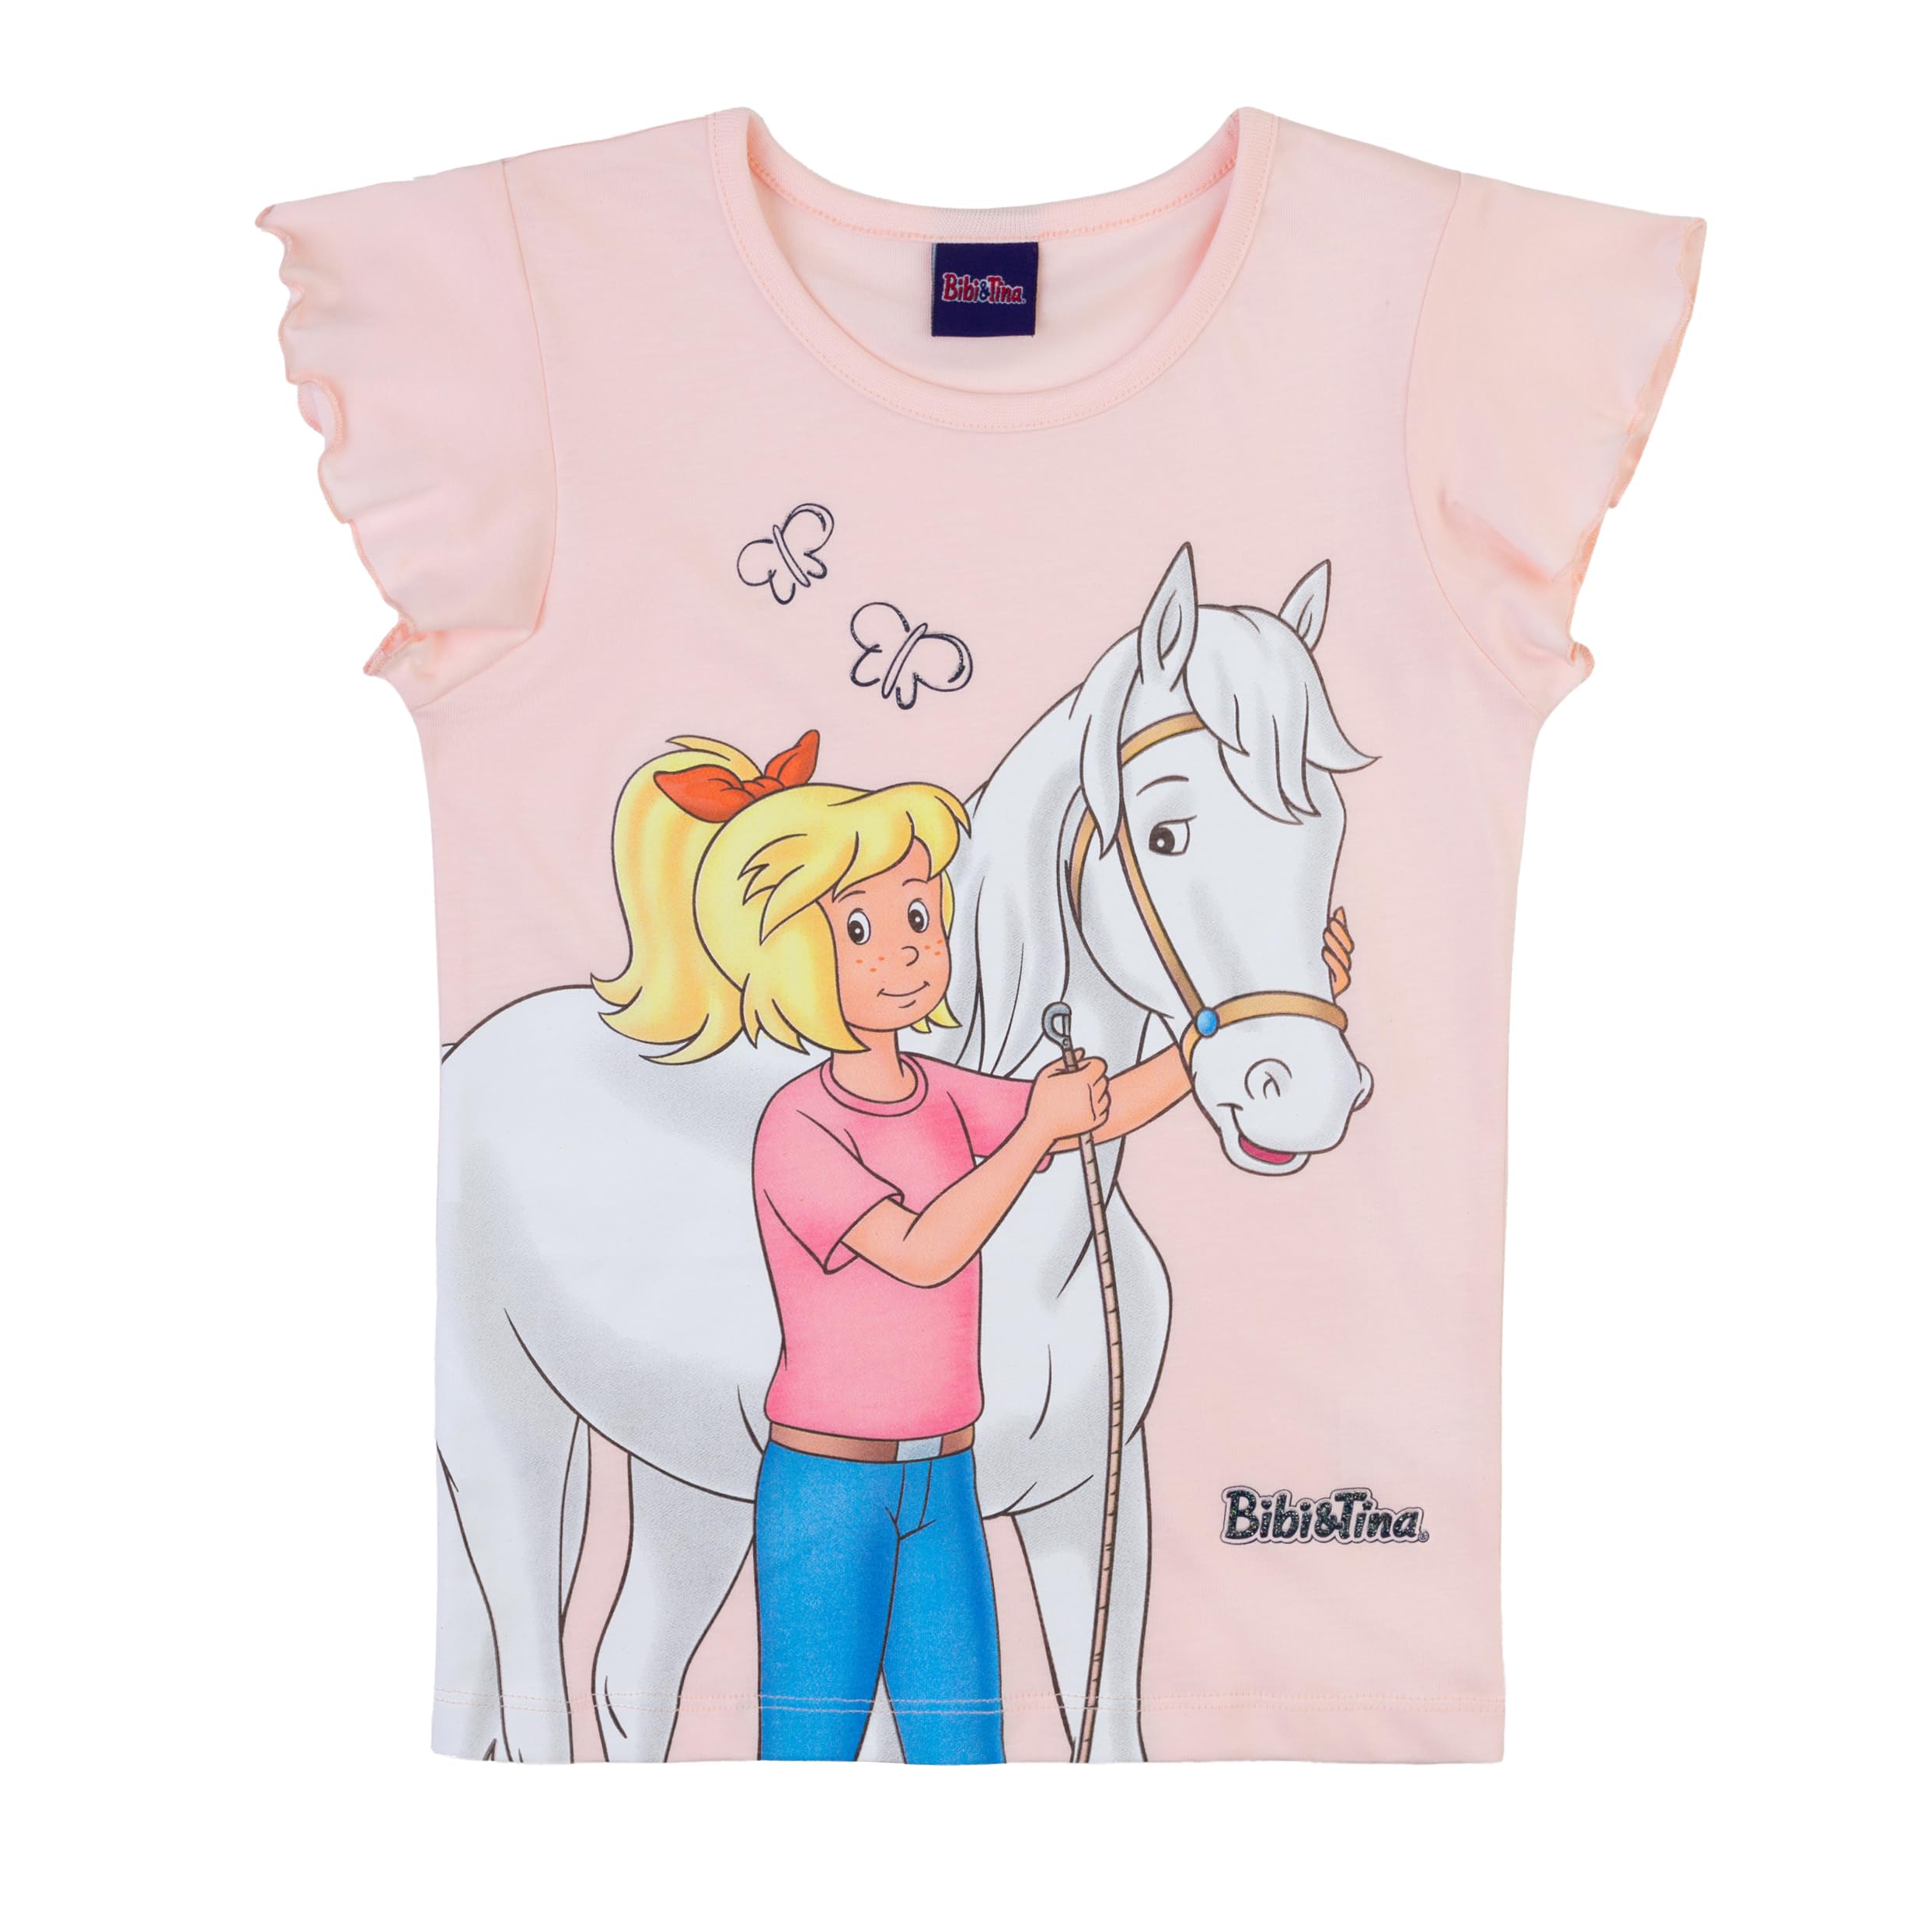 Bibi & Tina Mädchen T-Shirt 82412 rosa, Größe 128, 8 Jahre